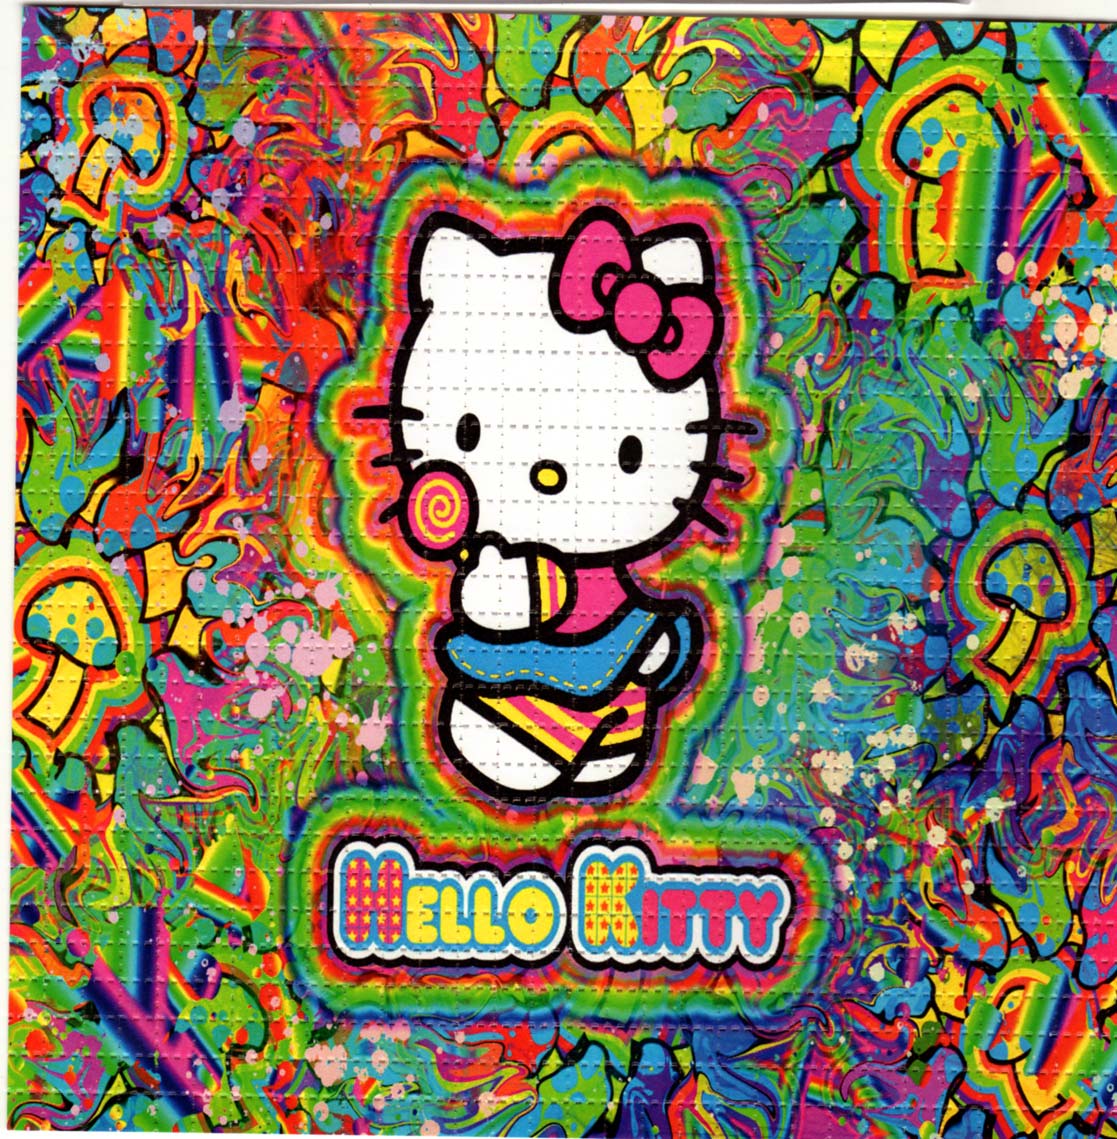 Hello Party Kitten LSD blotter art print